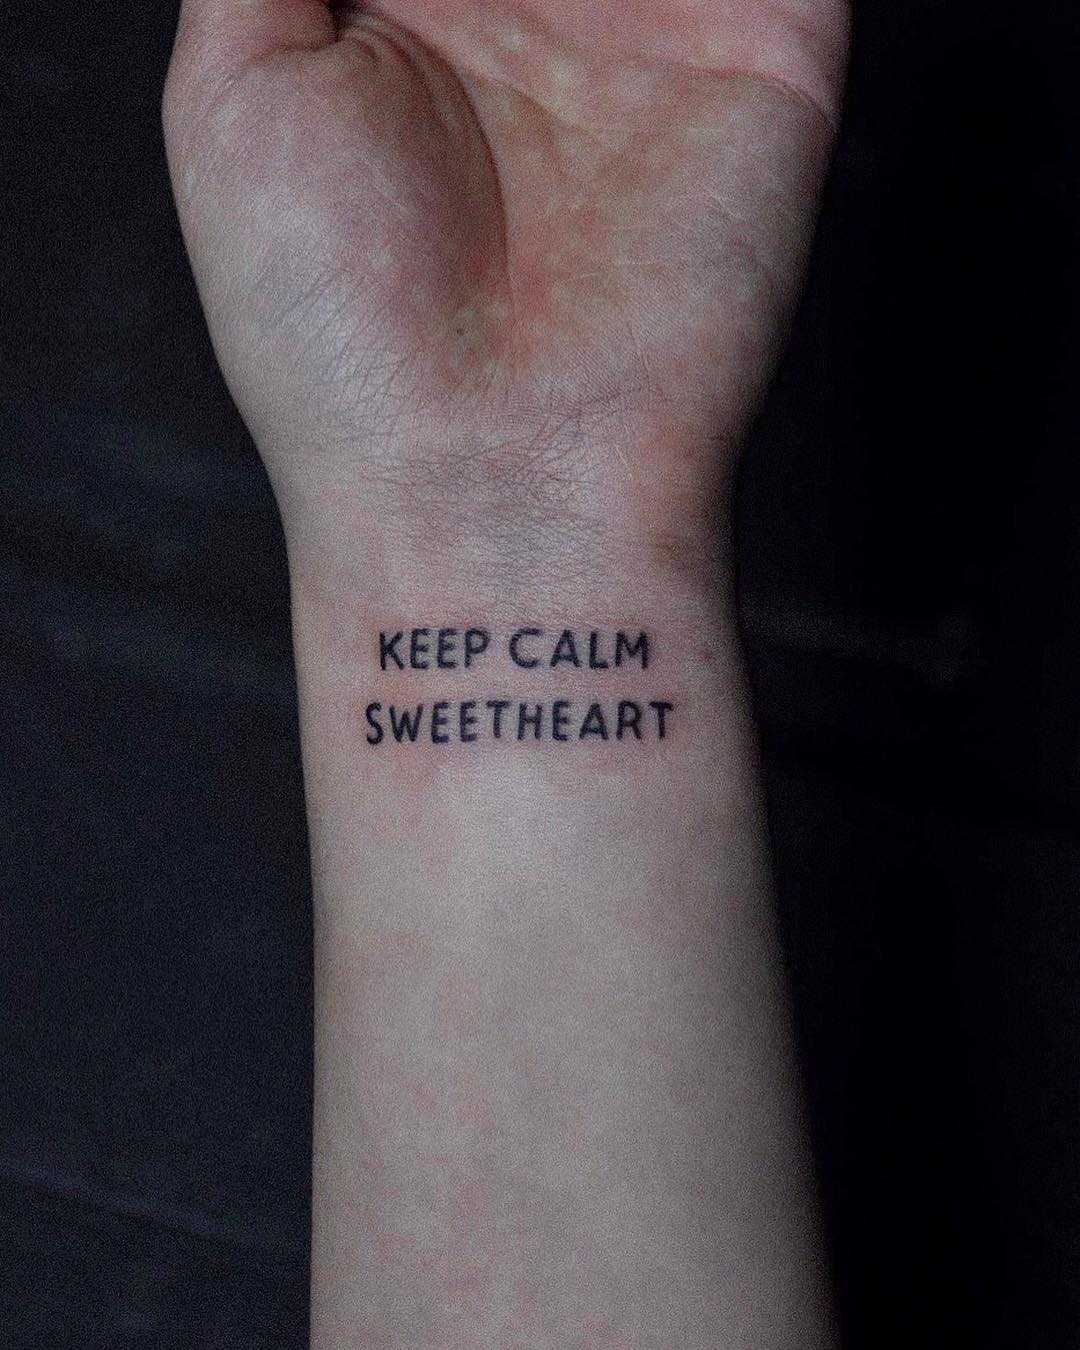 Keep calm sweetheart by tattooist Bongkee 